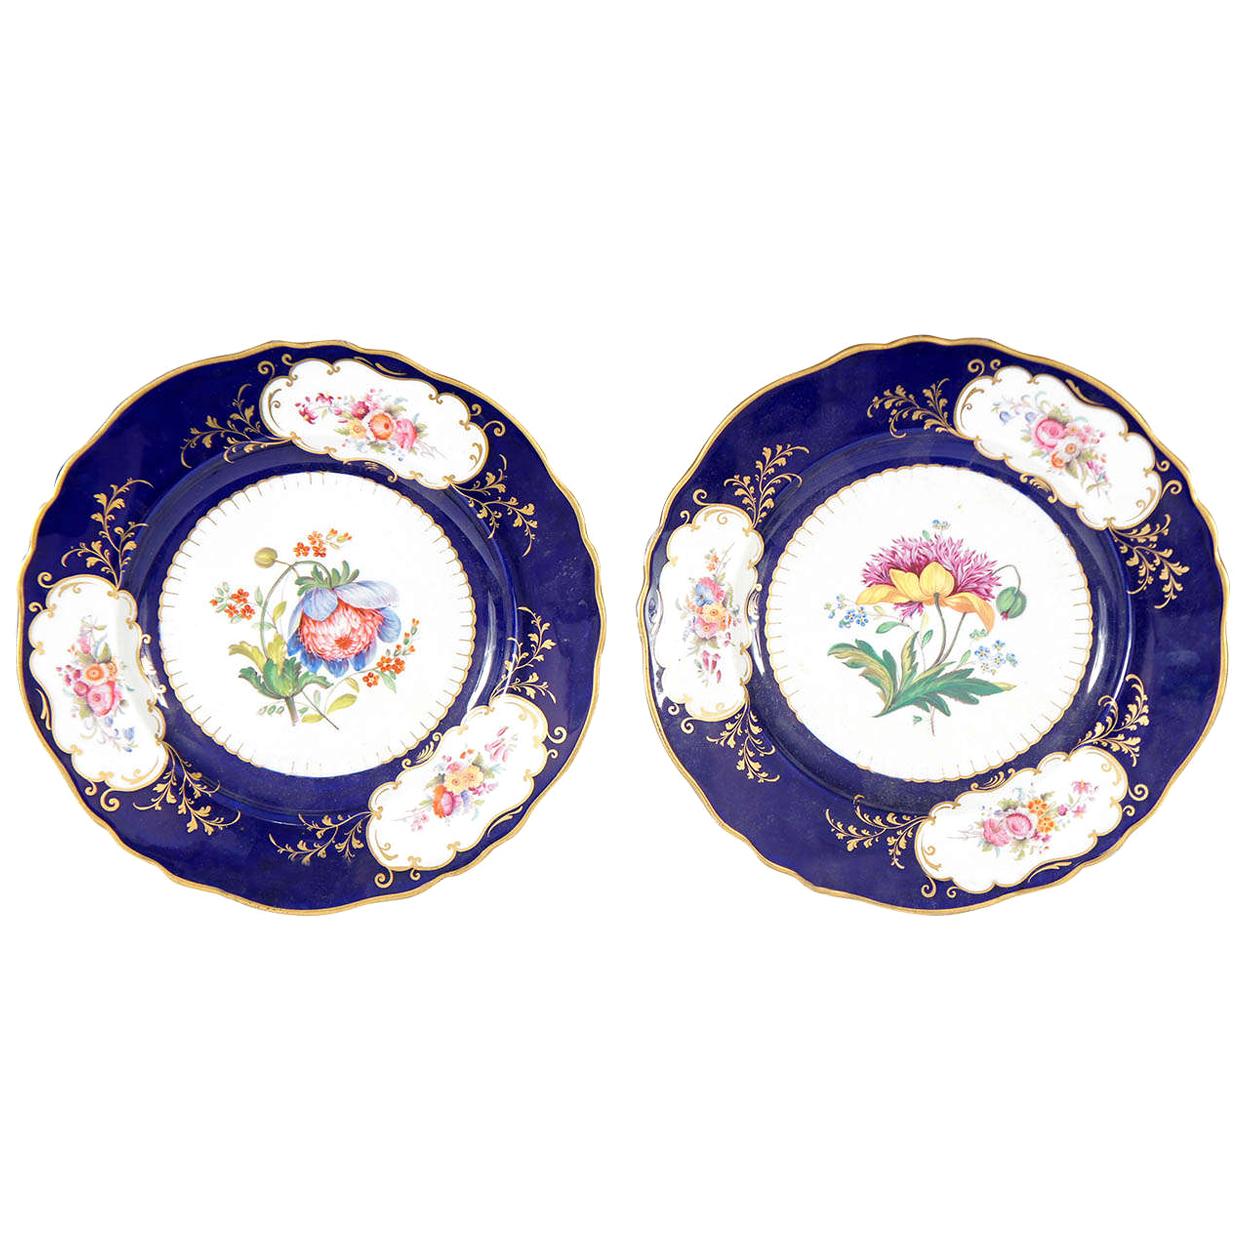 Similar Pair of Ridgway Porcelain Service Plates For Sale